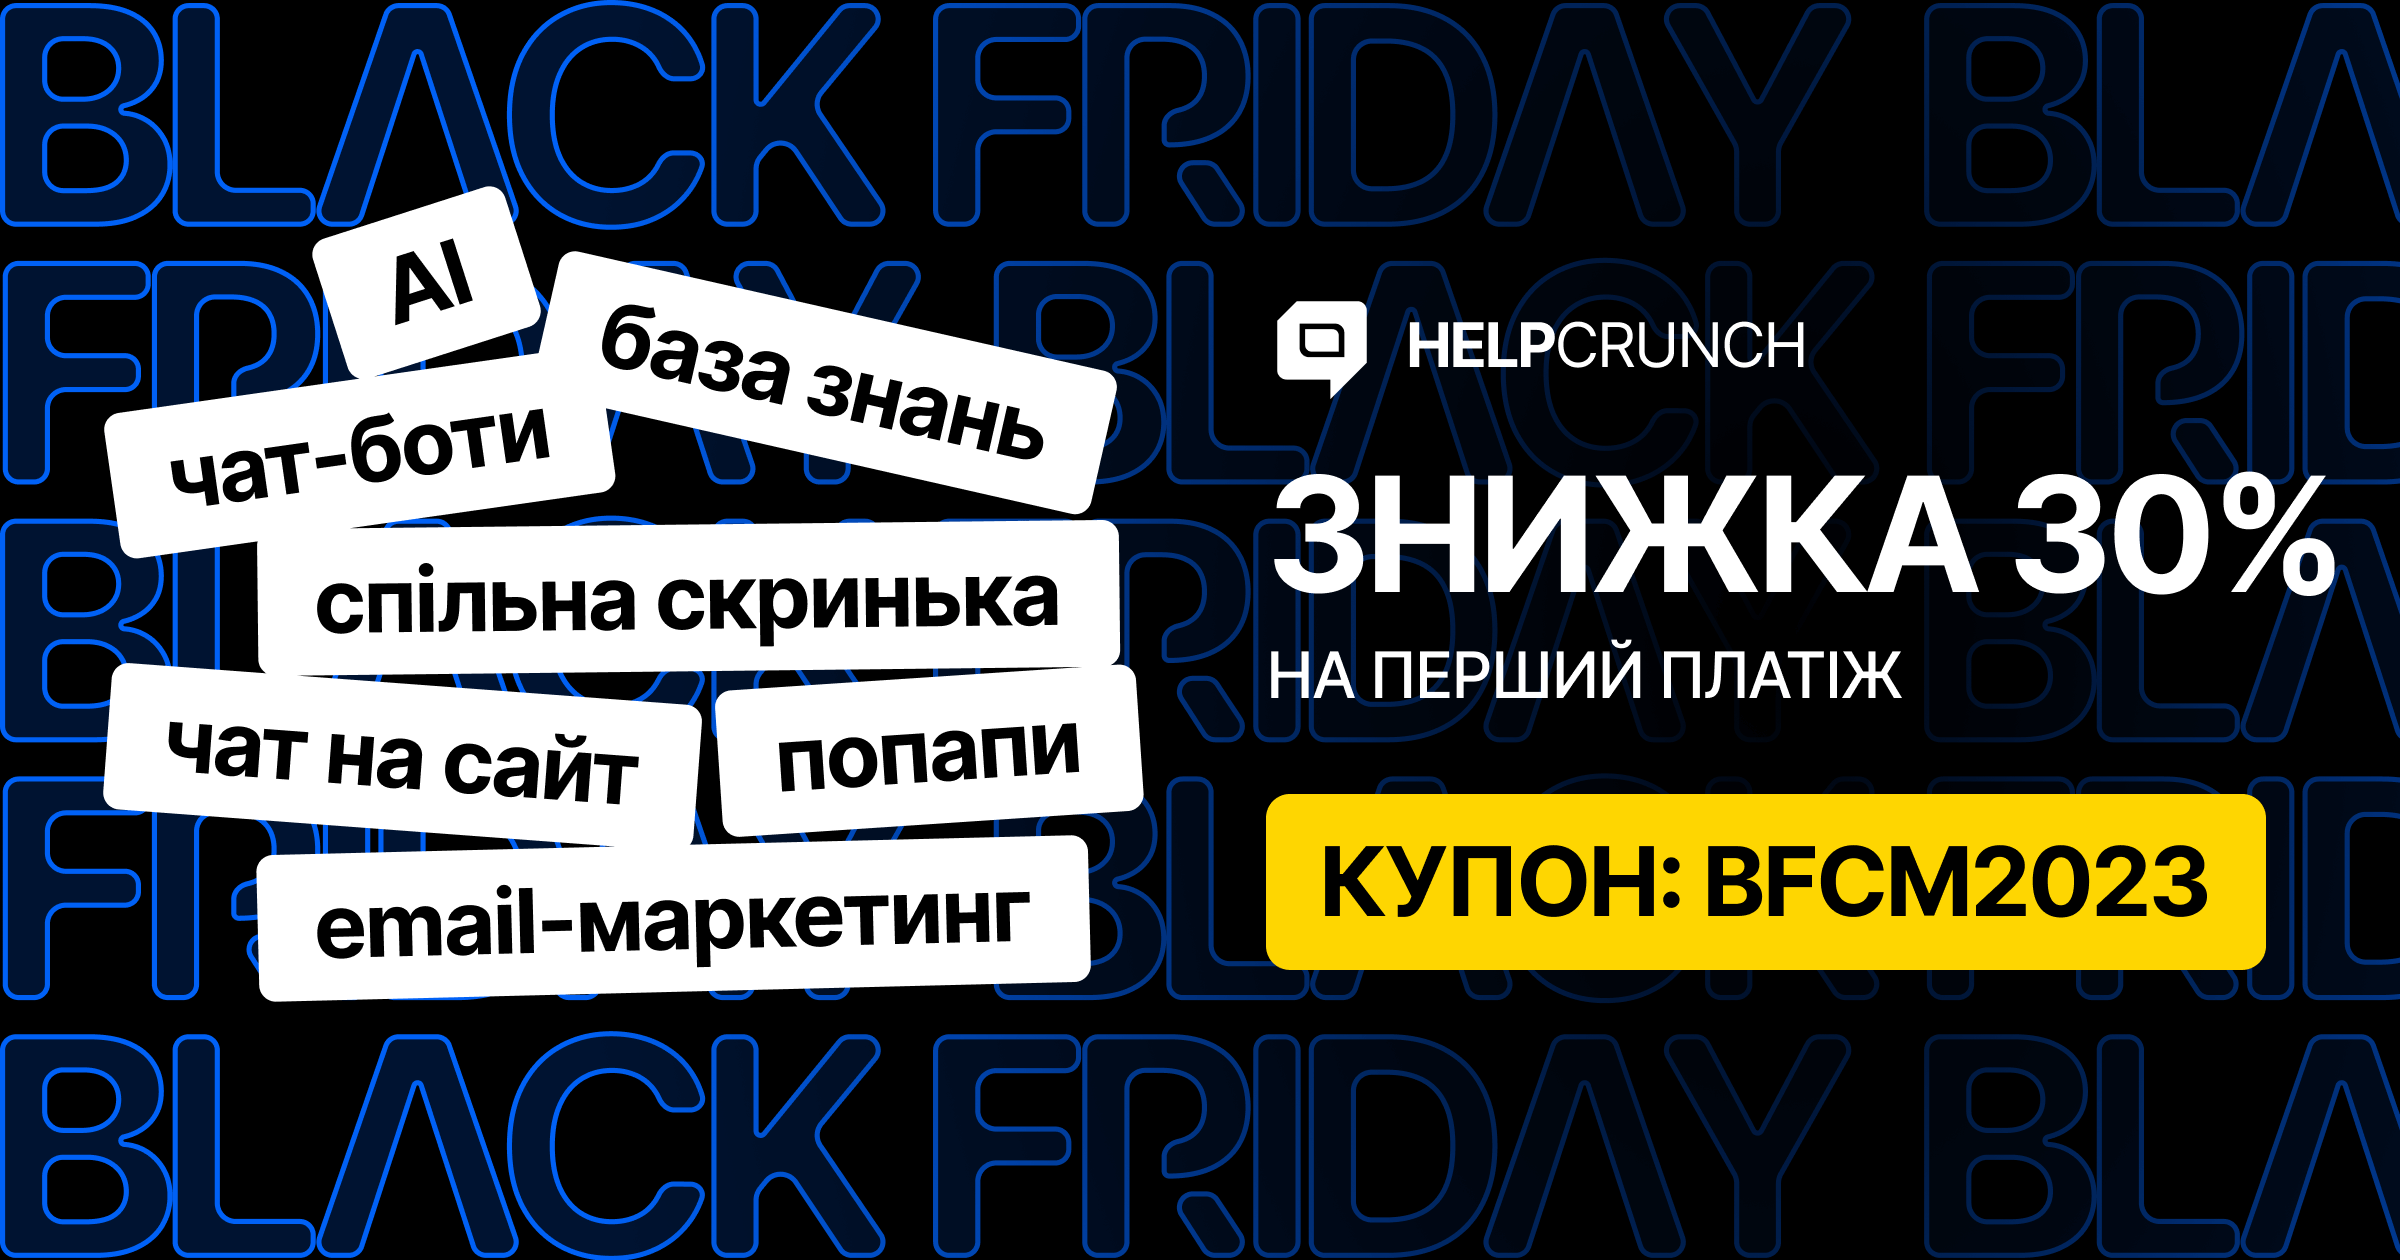 Helpcrunch Black Friday 2023 deal banner